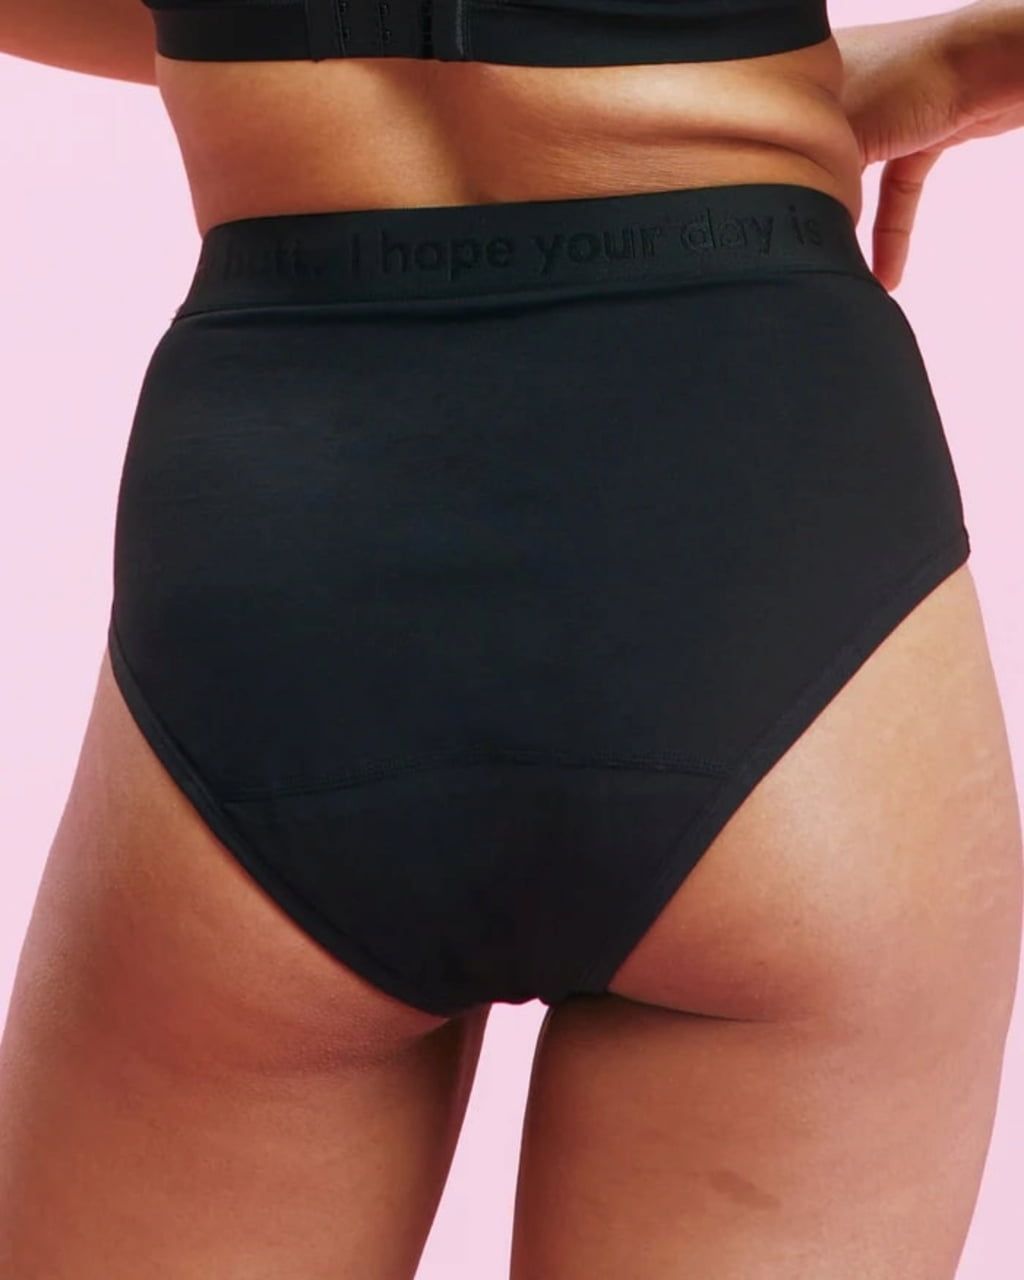 1Pc Women's Pocket Physiological Underwear Women's Leak Proof Widened Pure  Cotton Crotch Large Medium High Waist Sanitary Pants Black 2XL